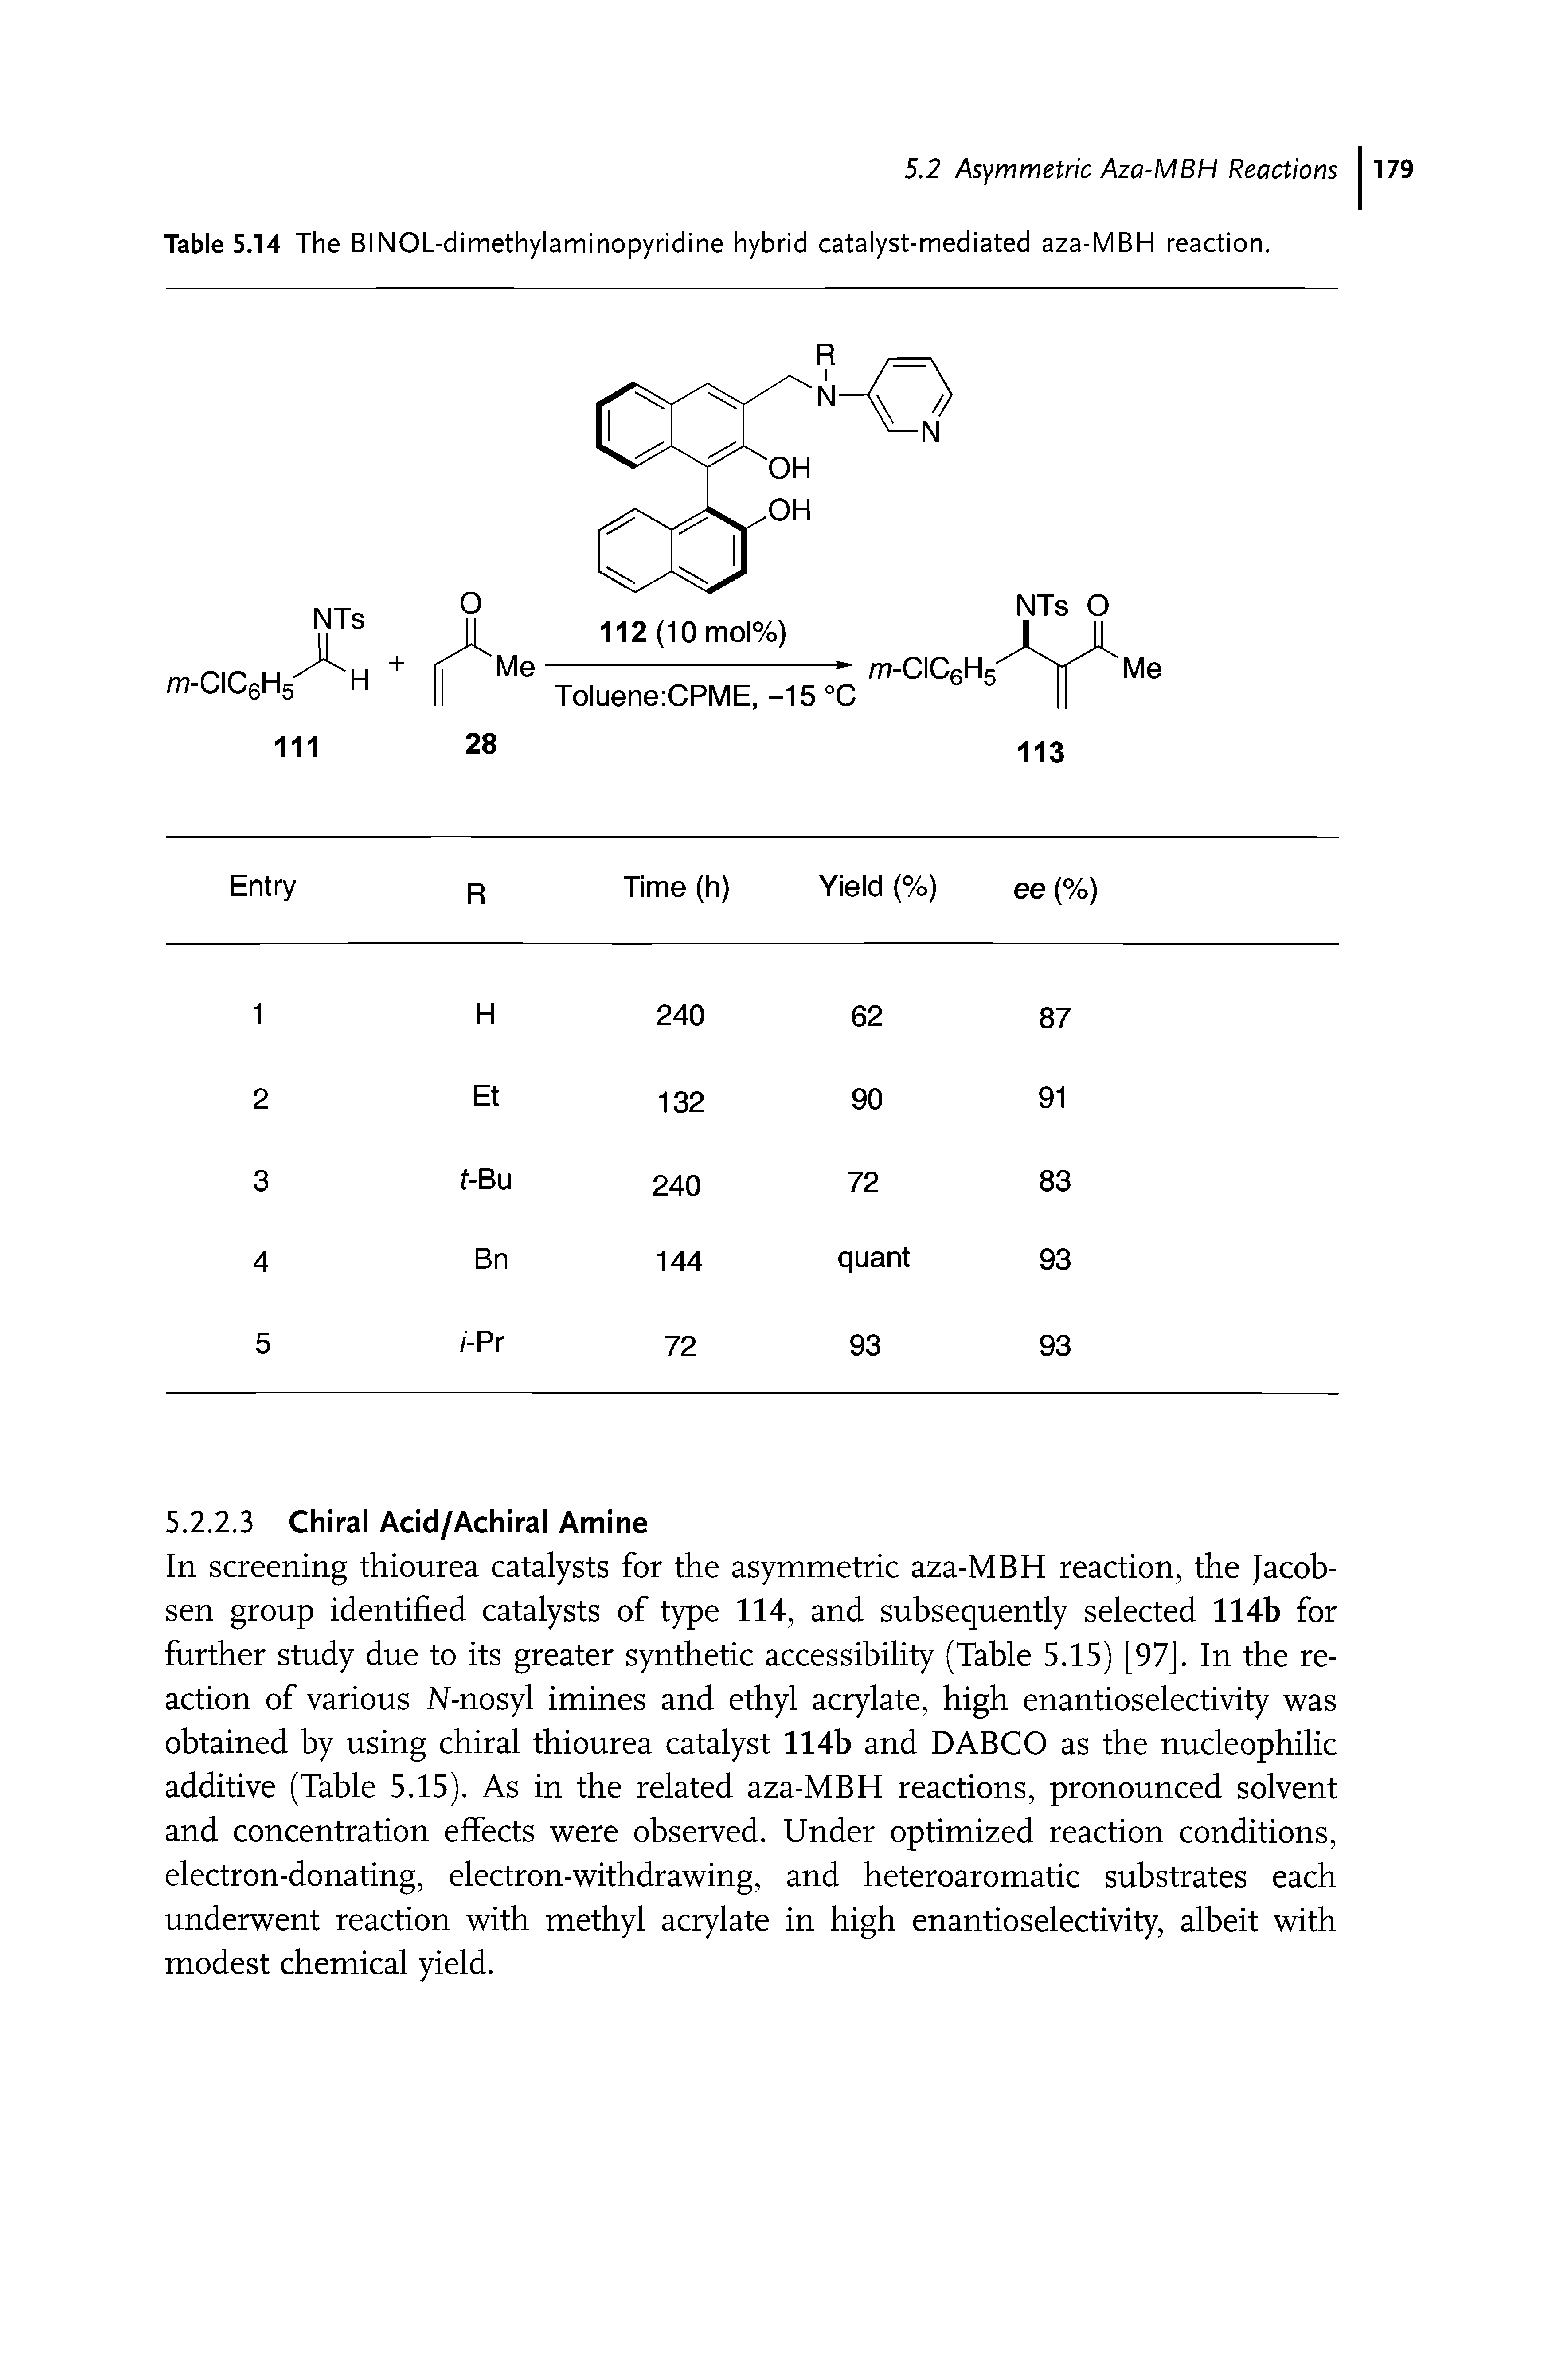 Table 5.14 The BINOL-dimethylaminopyridine hybrid catalyst-mediated aza-MBH reaction.